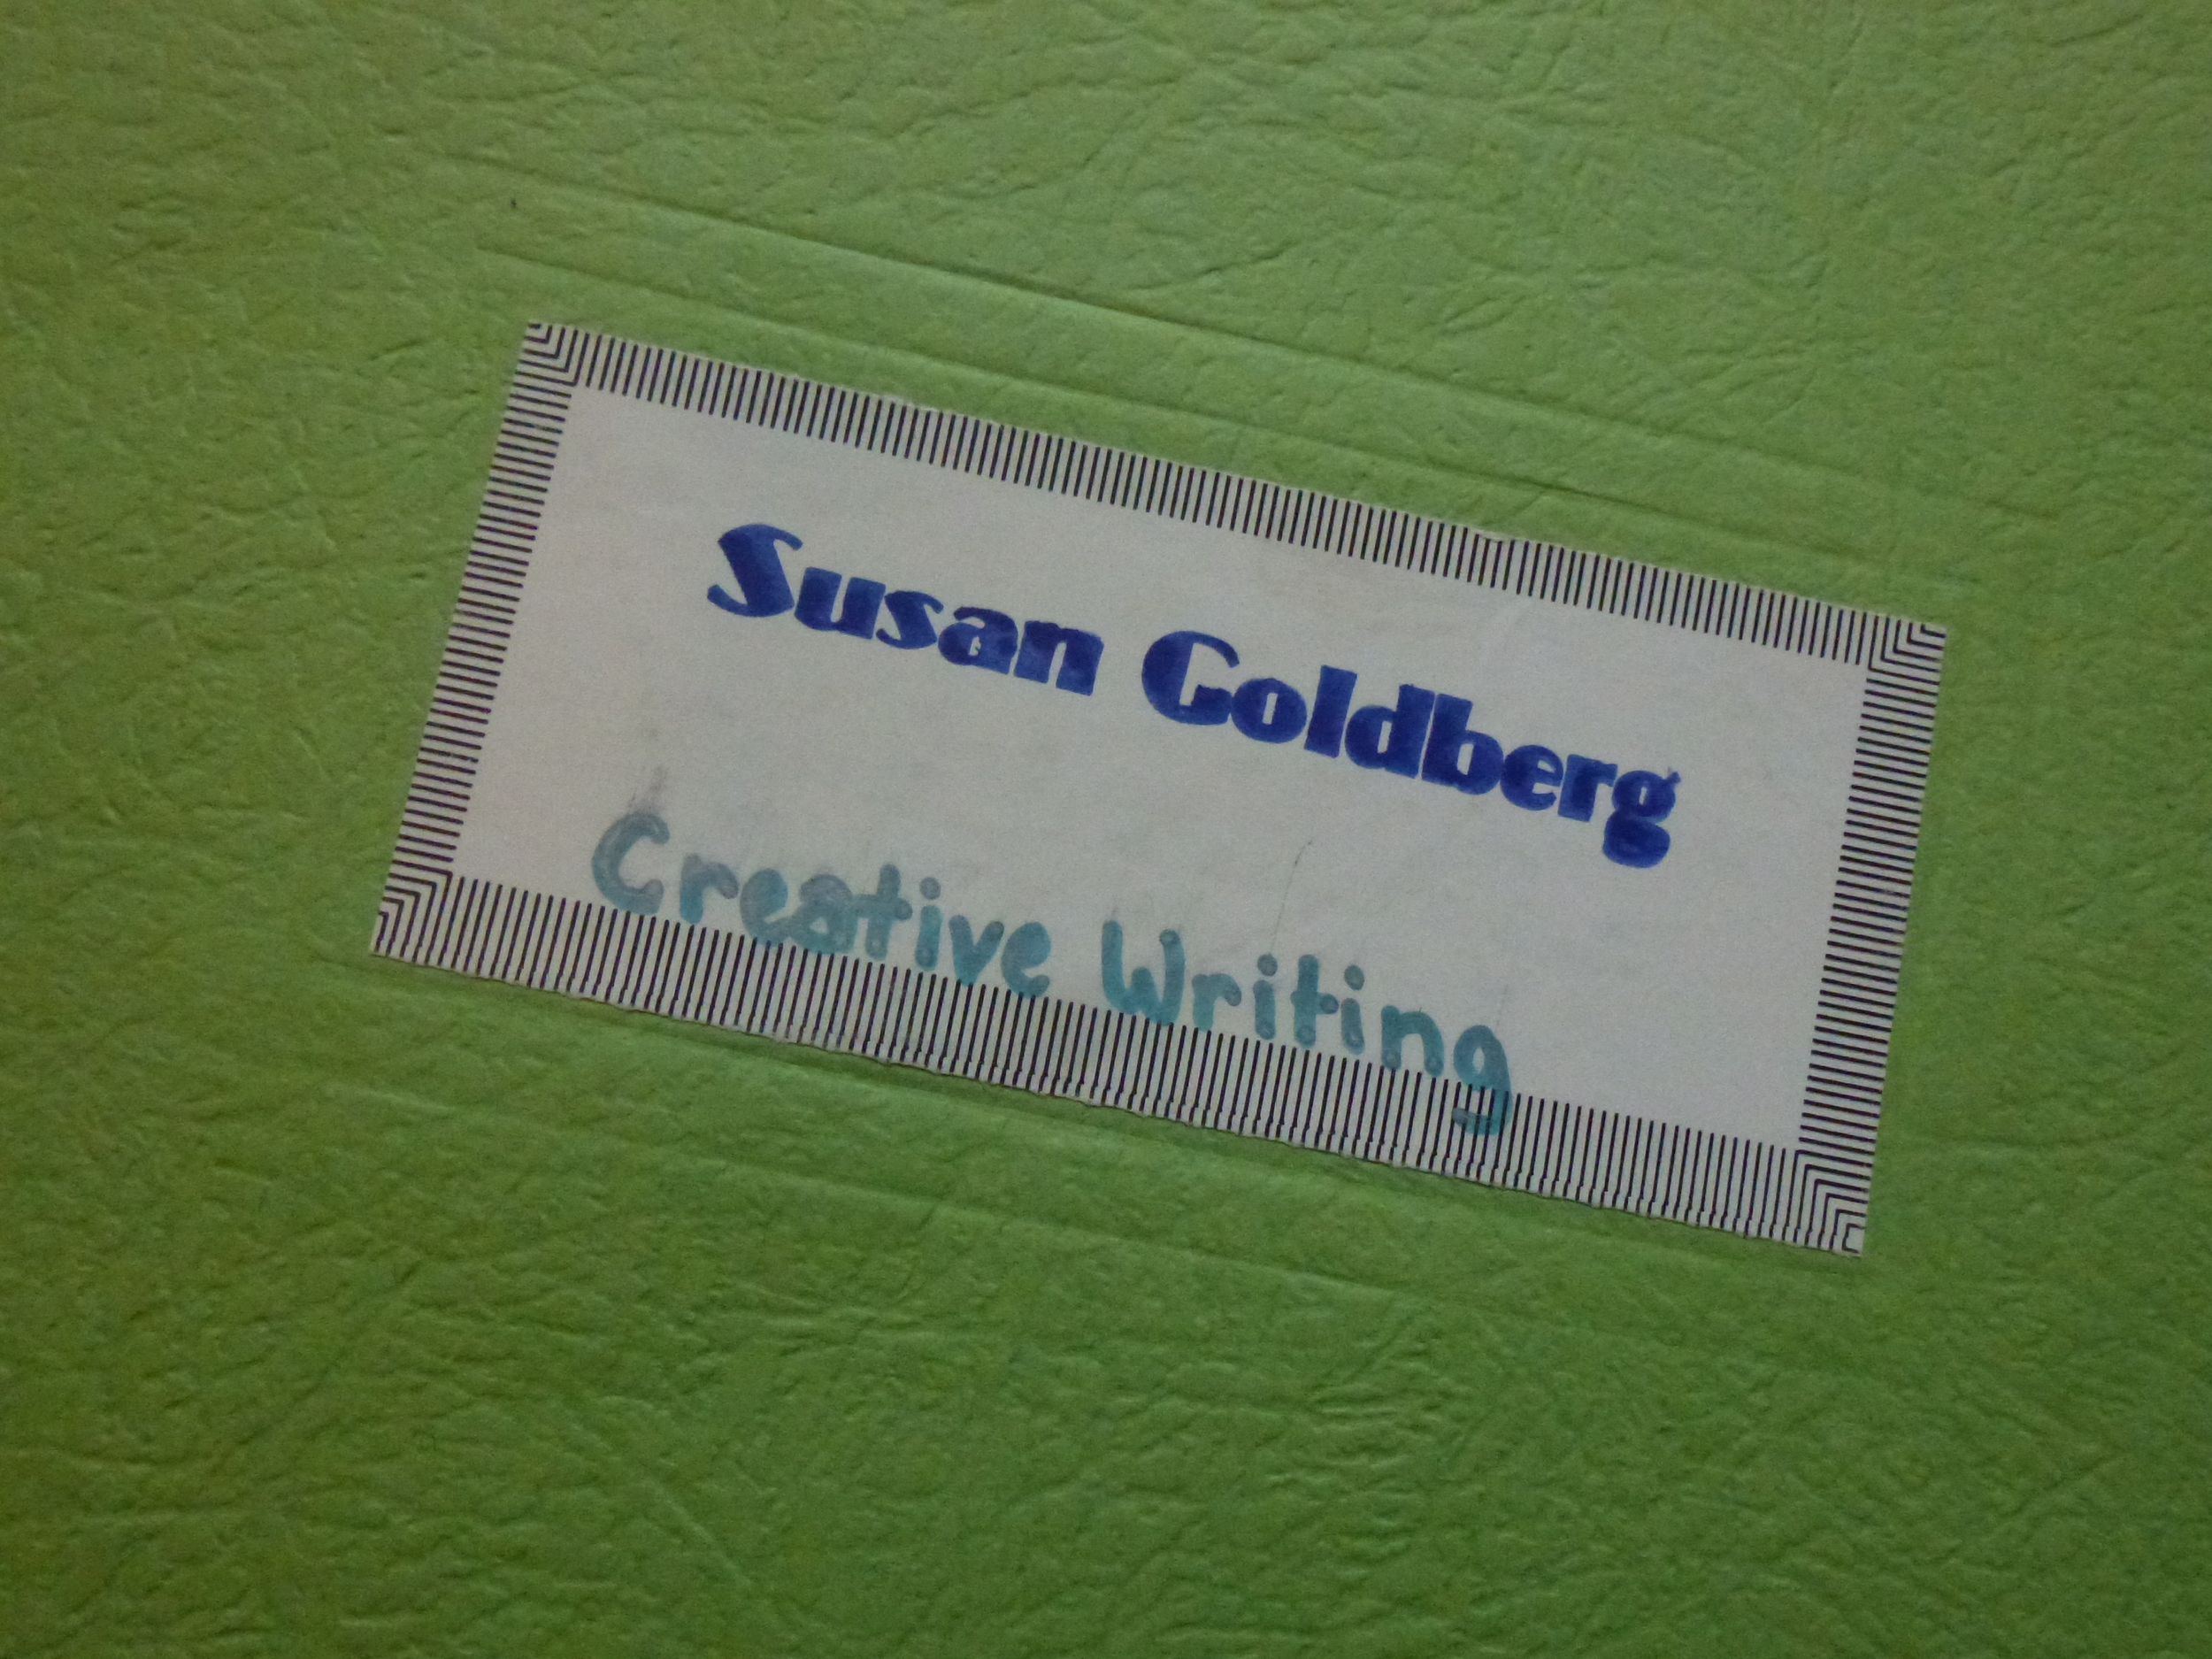 Creative writing4